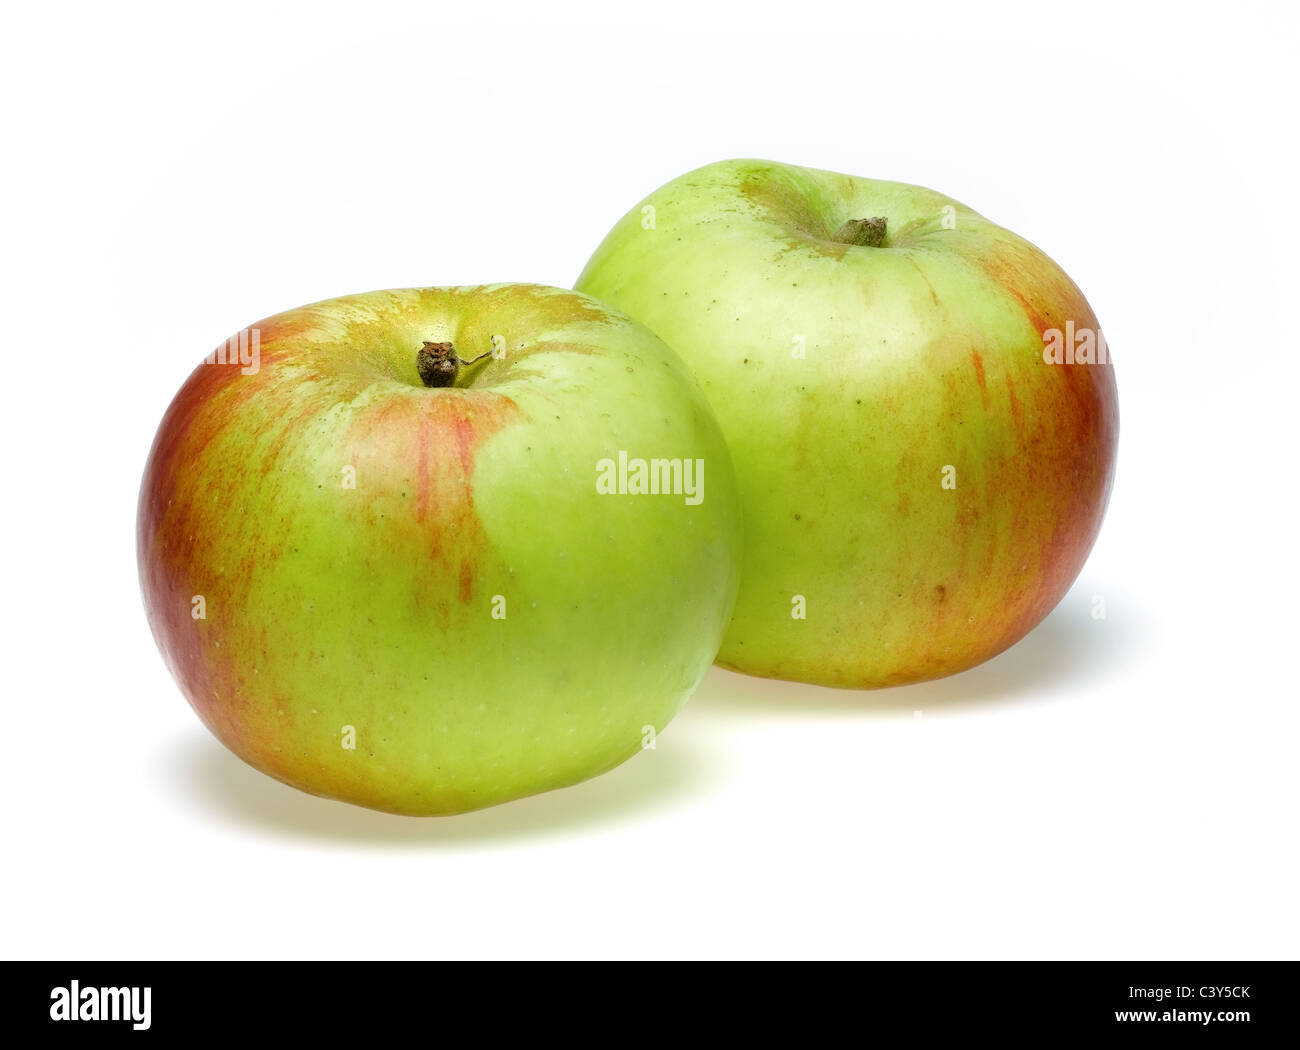 Bramley apples Stock Photo